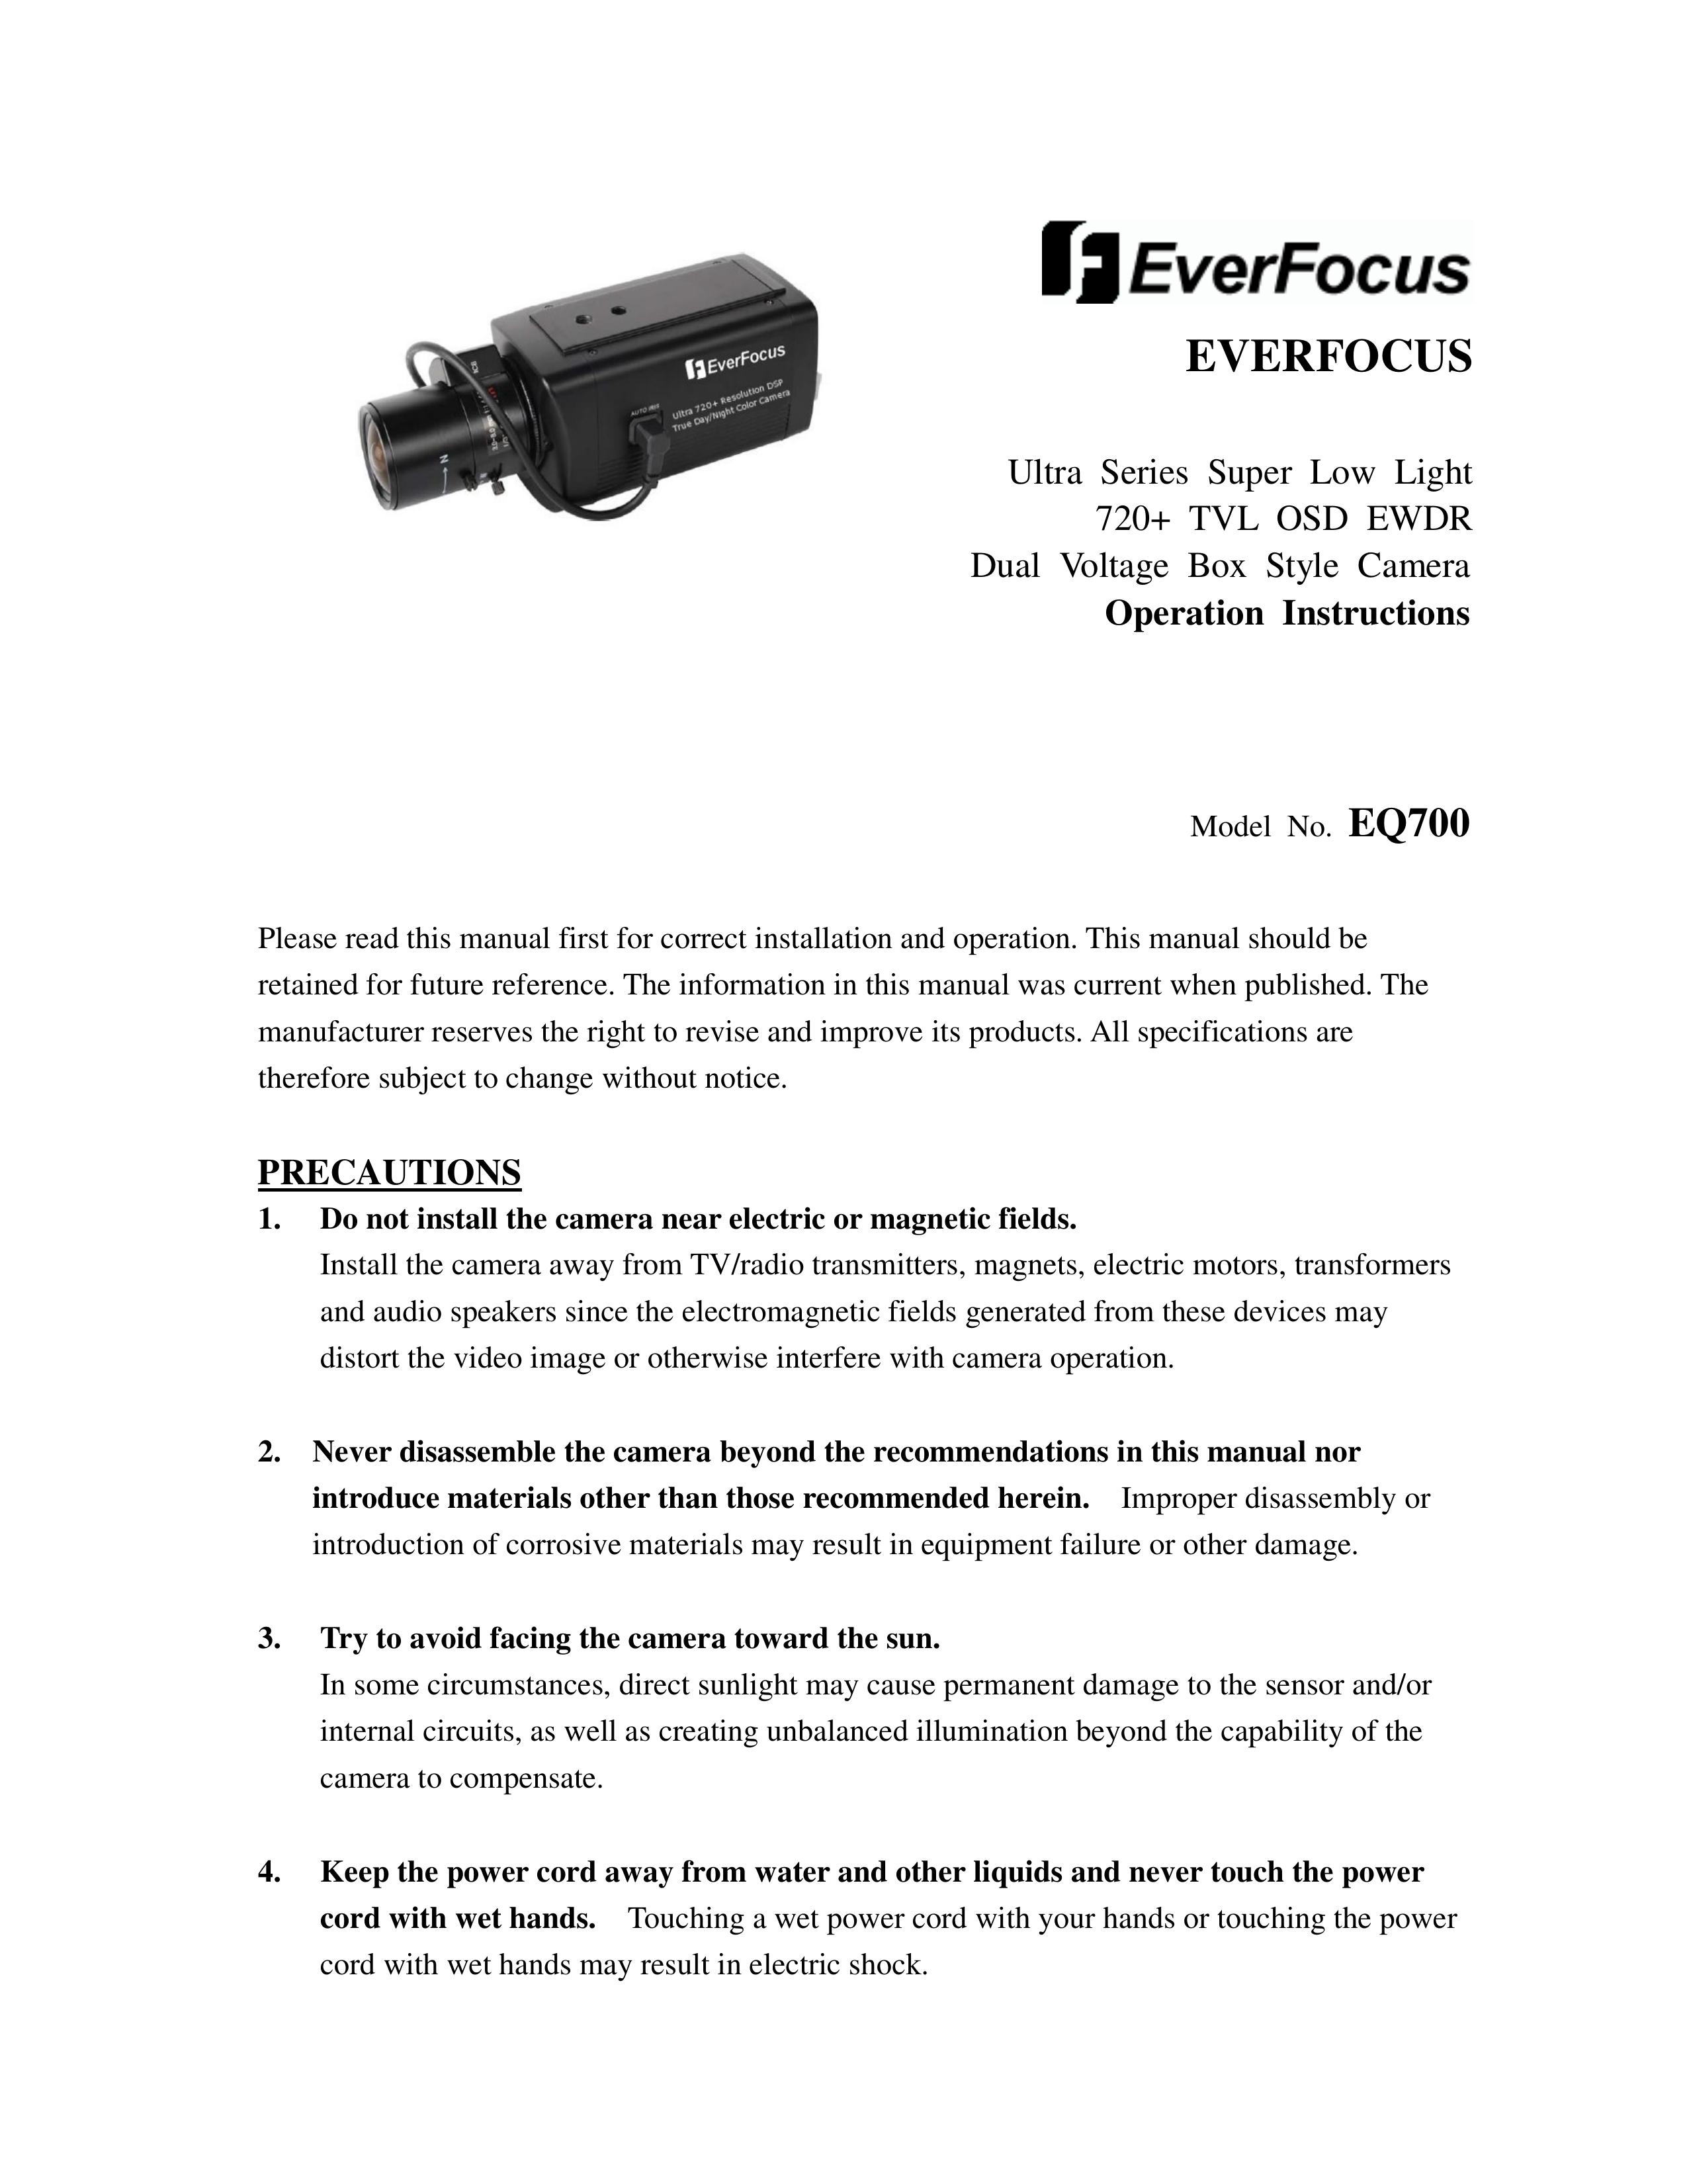 EverFocus EQ700 Camera Accessories User Manual